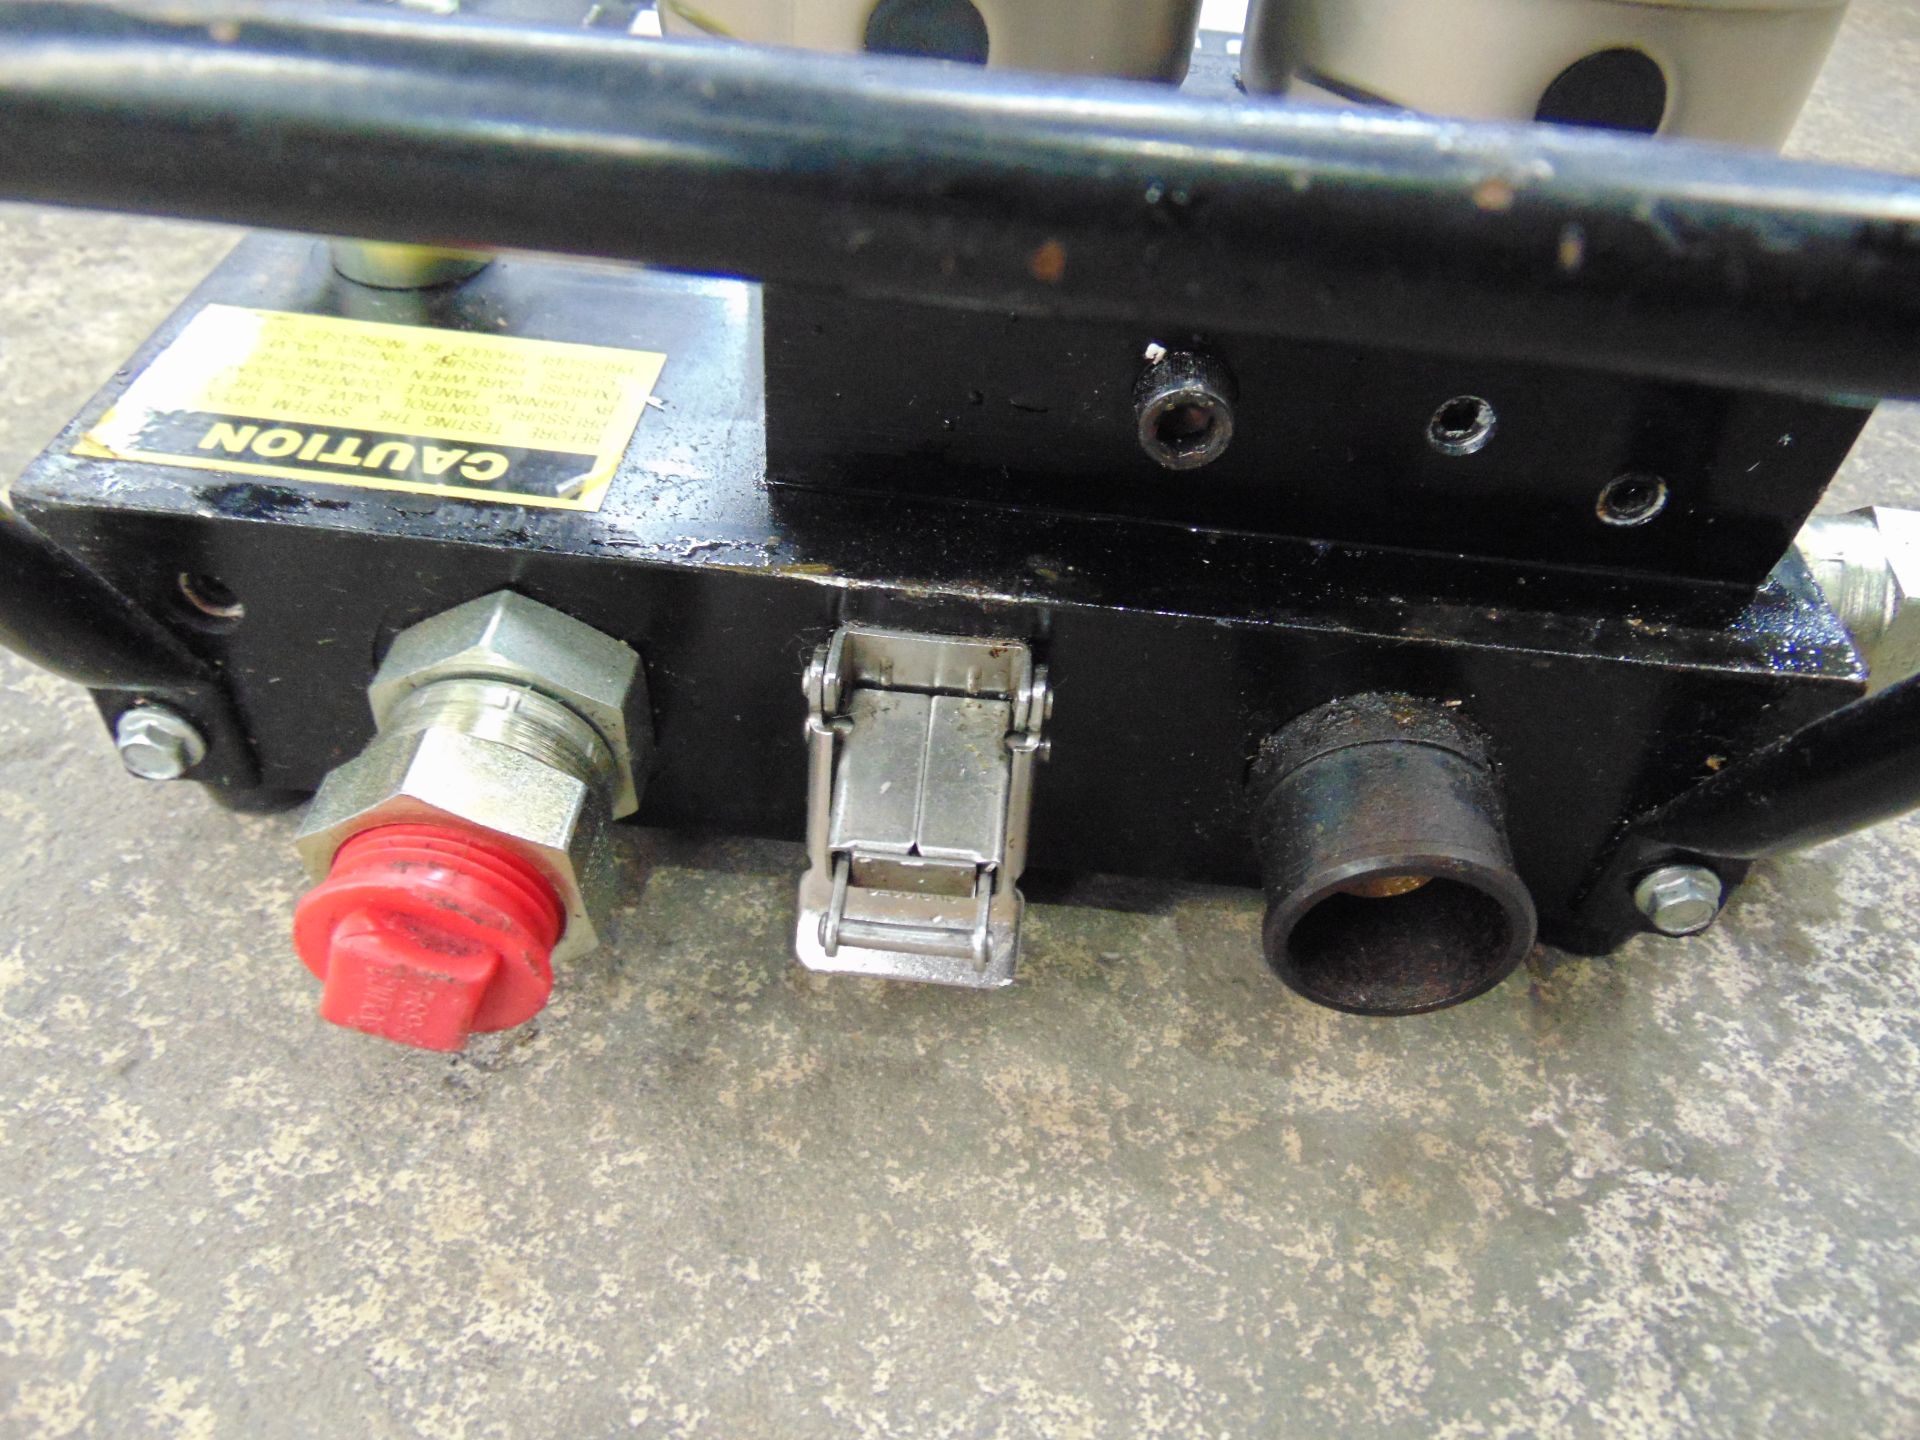 SPX / OTC In-Line Hydraulic Test Kit No. 4221 Model C-75 - Image 5 of 7